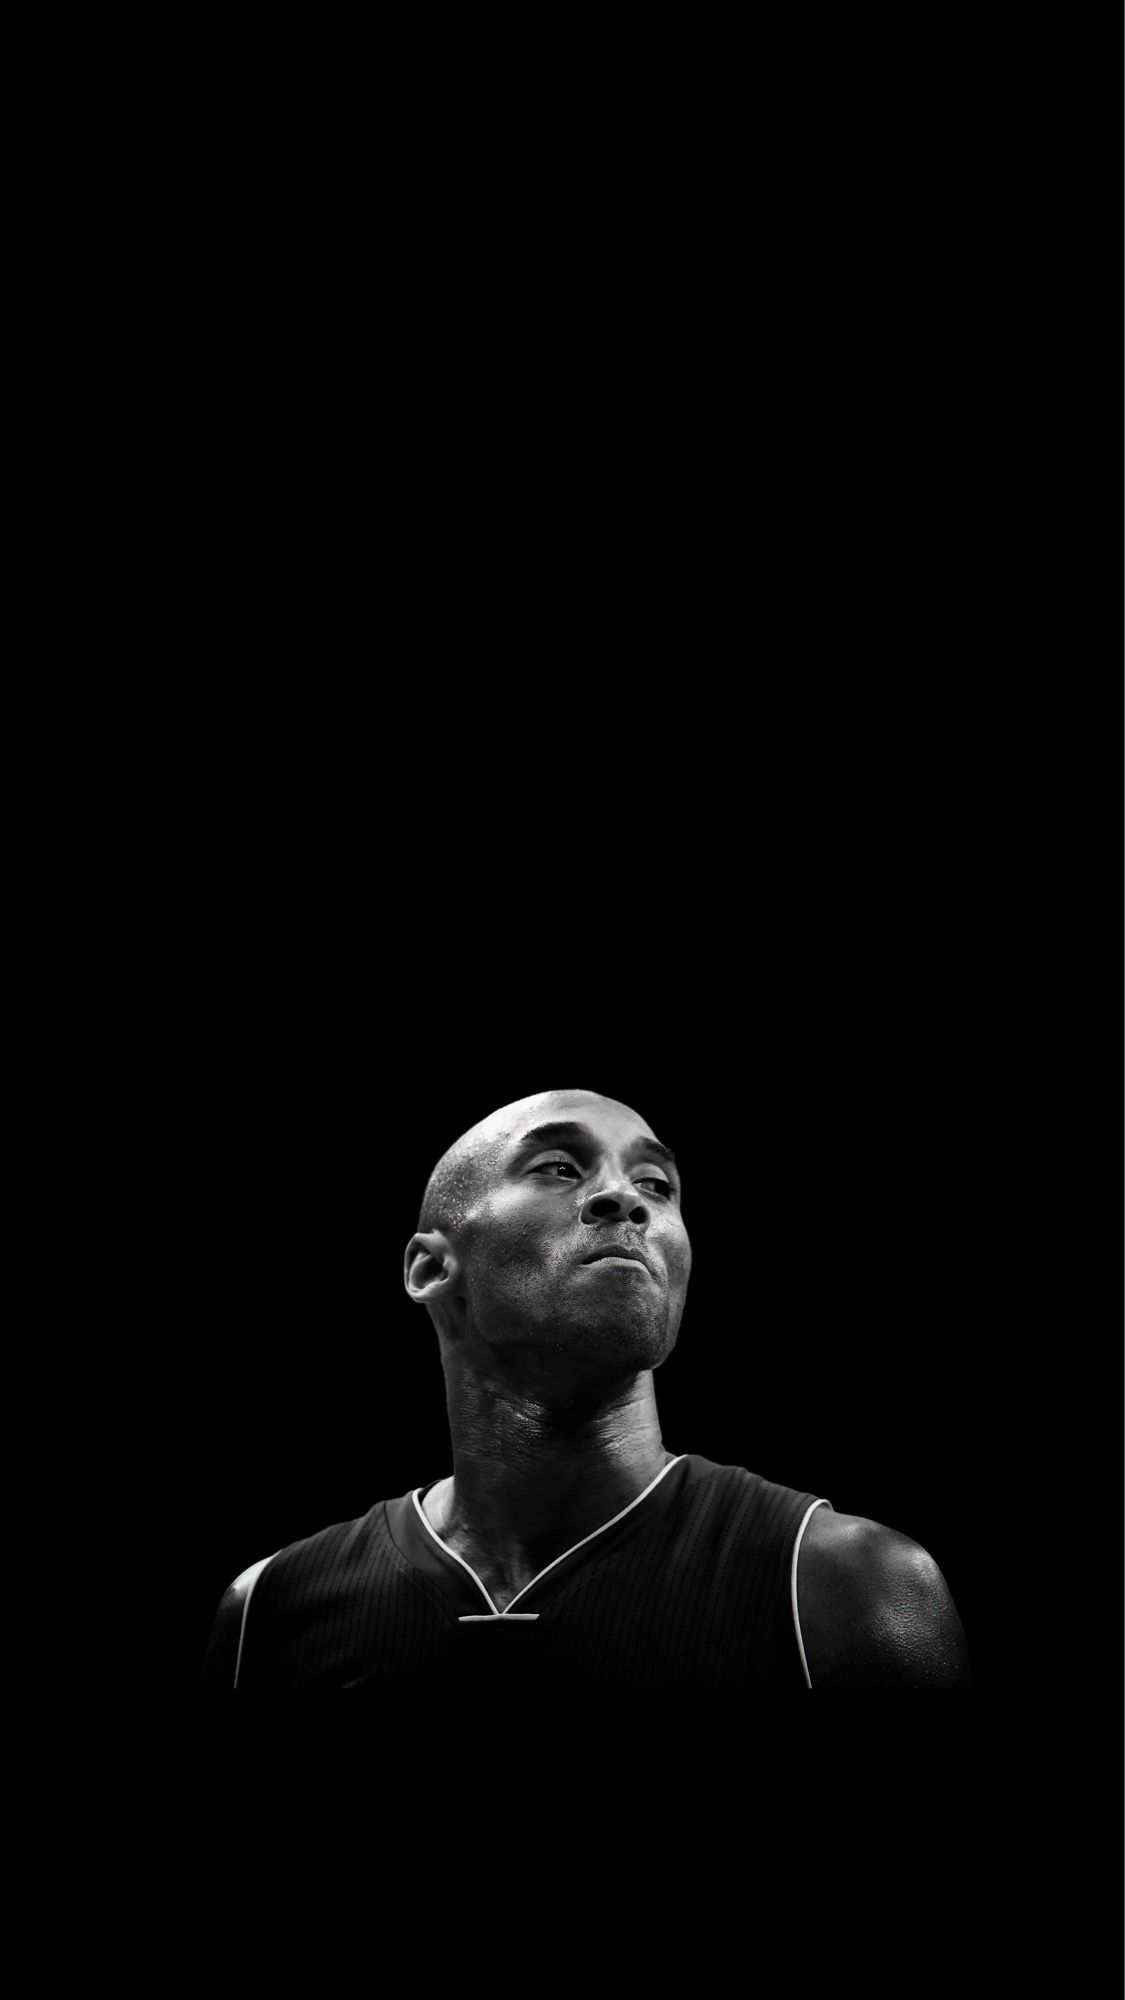 Kobe Bryant Wallpaper Nba Pictures Basketball